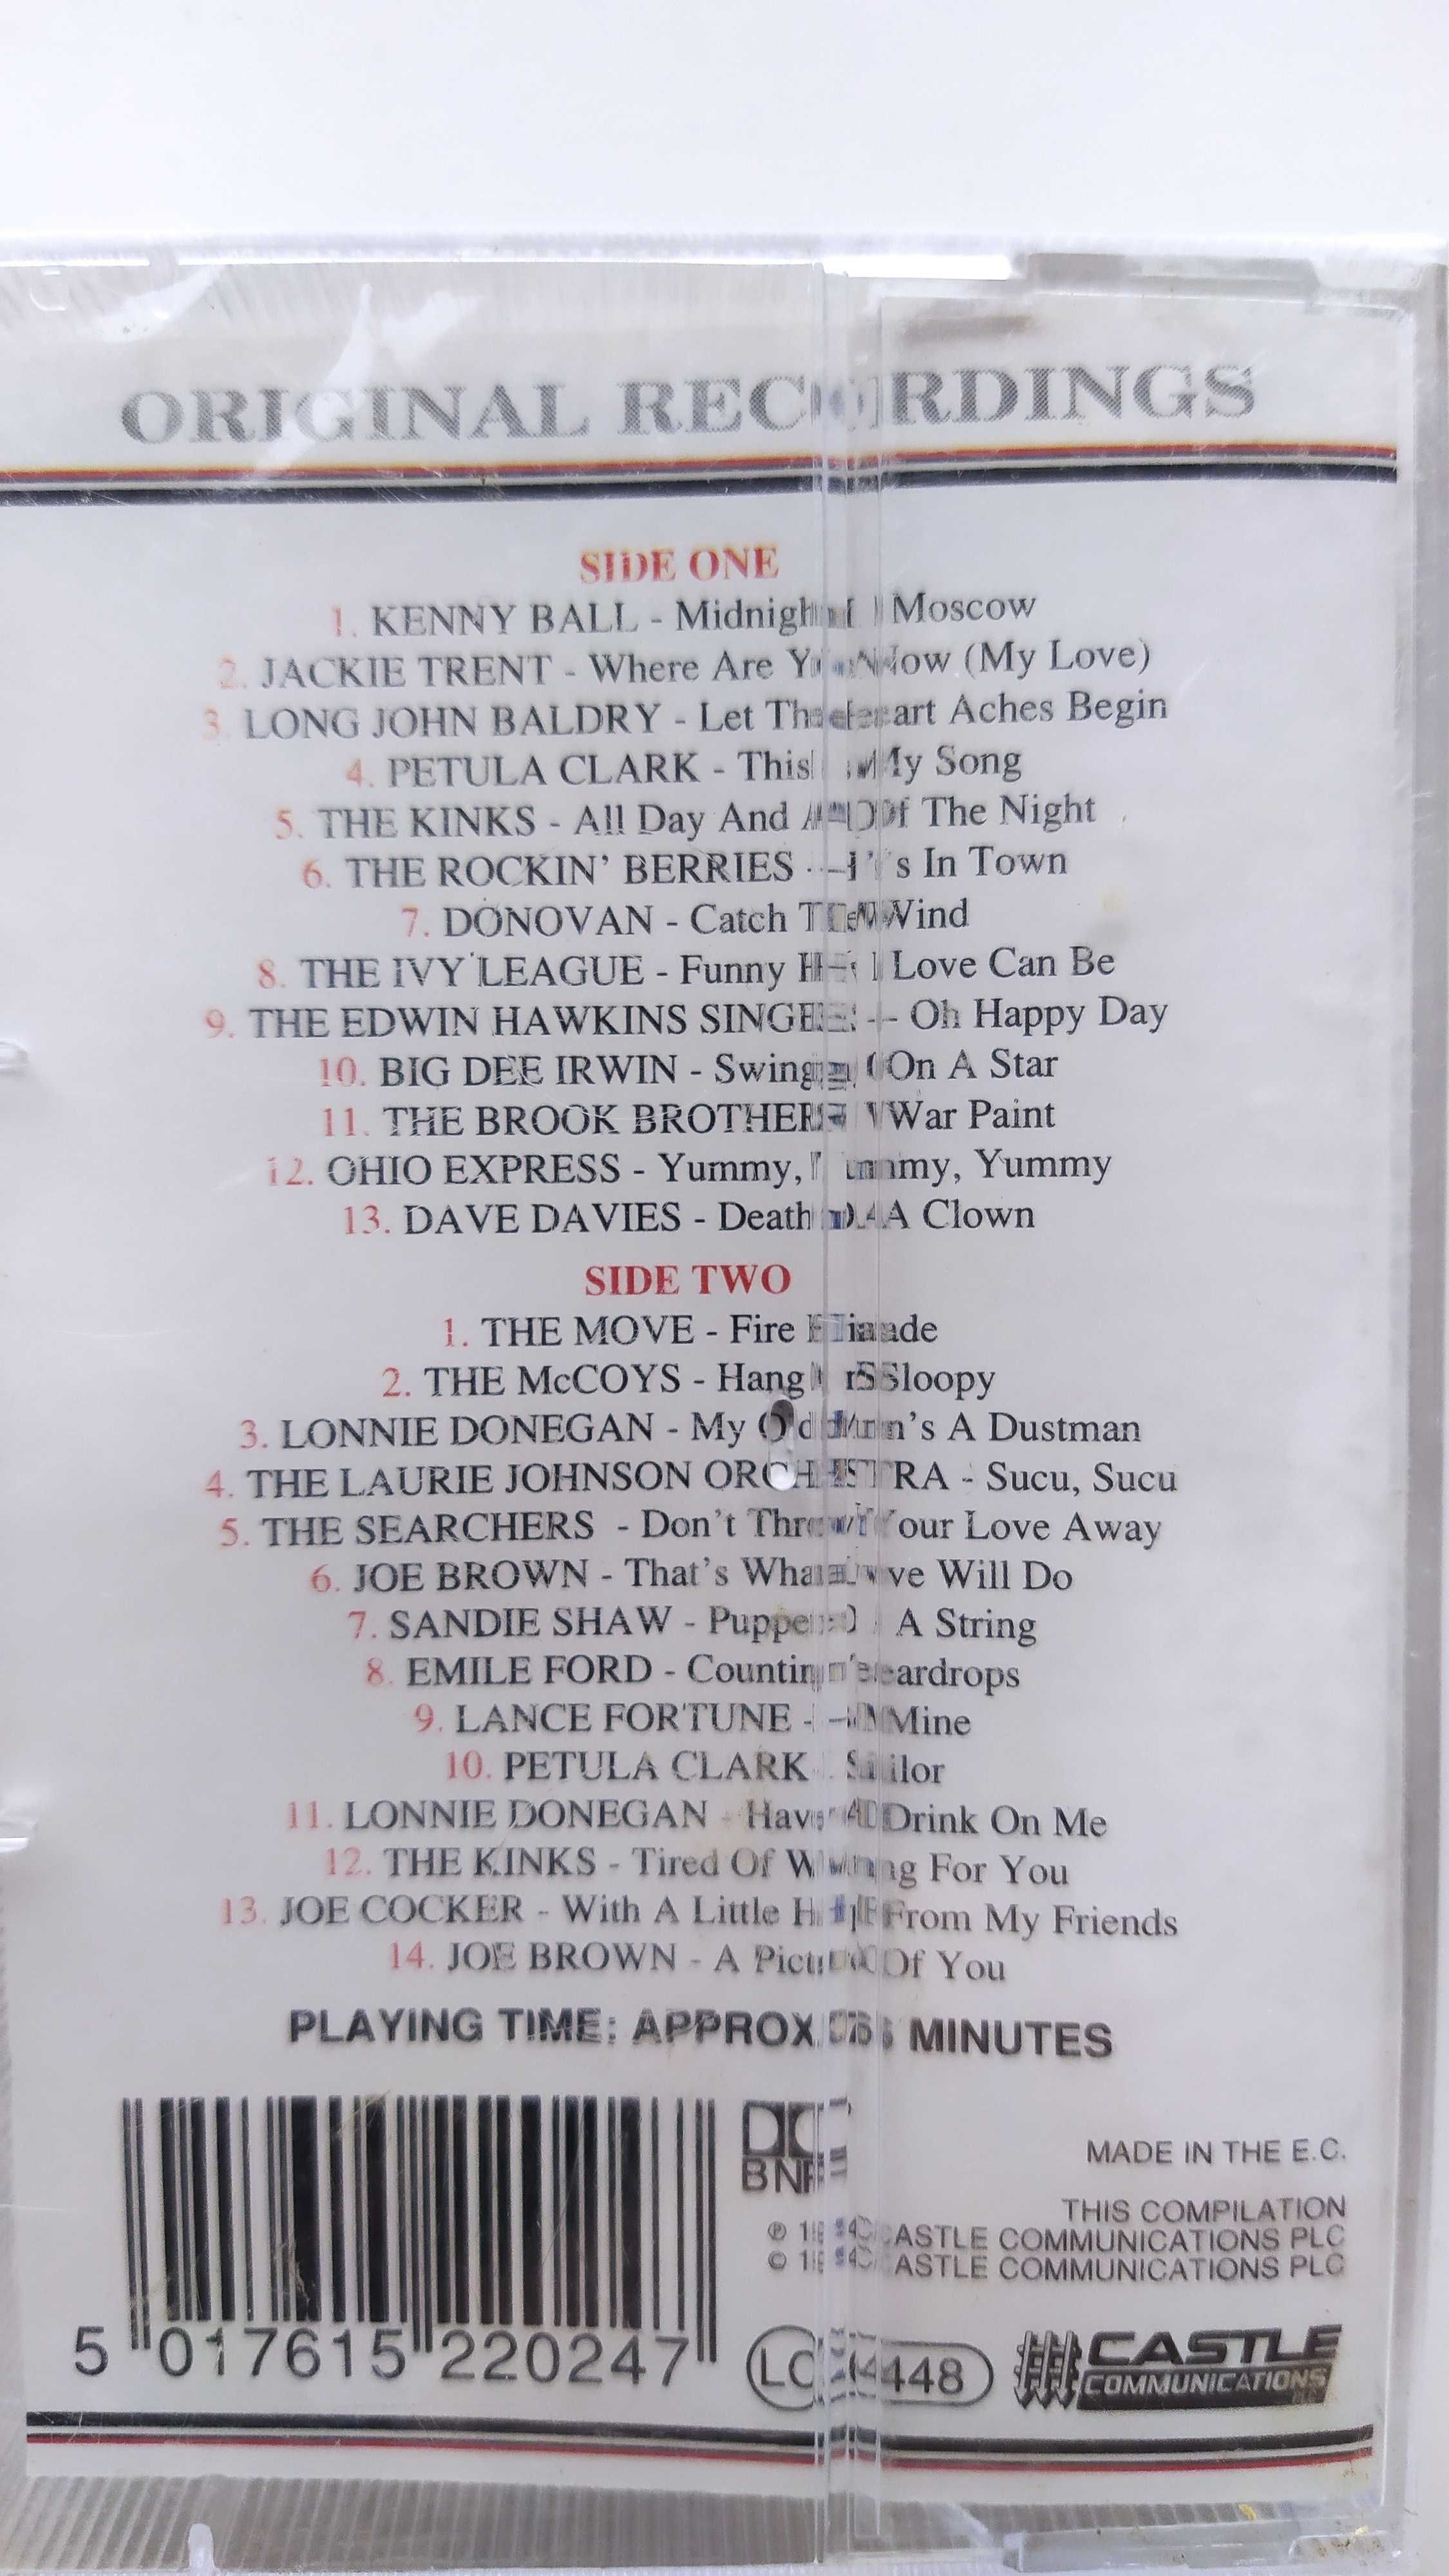 TOP TEN HITS of the sixties 27 Clarc Donovan Cocer Kinks Move kaseta